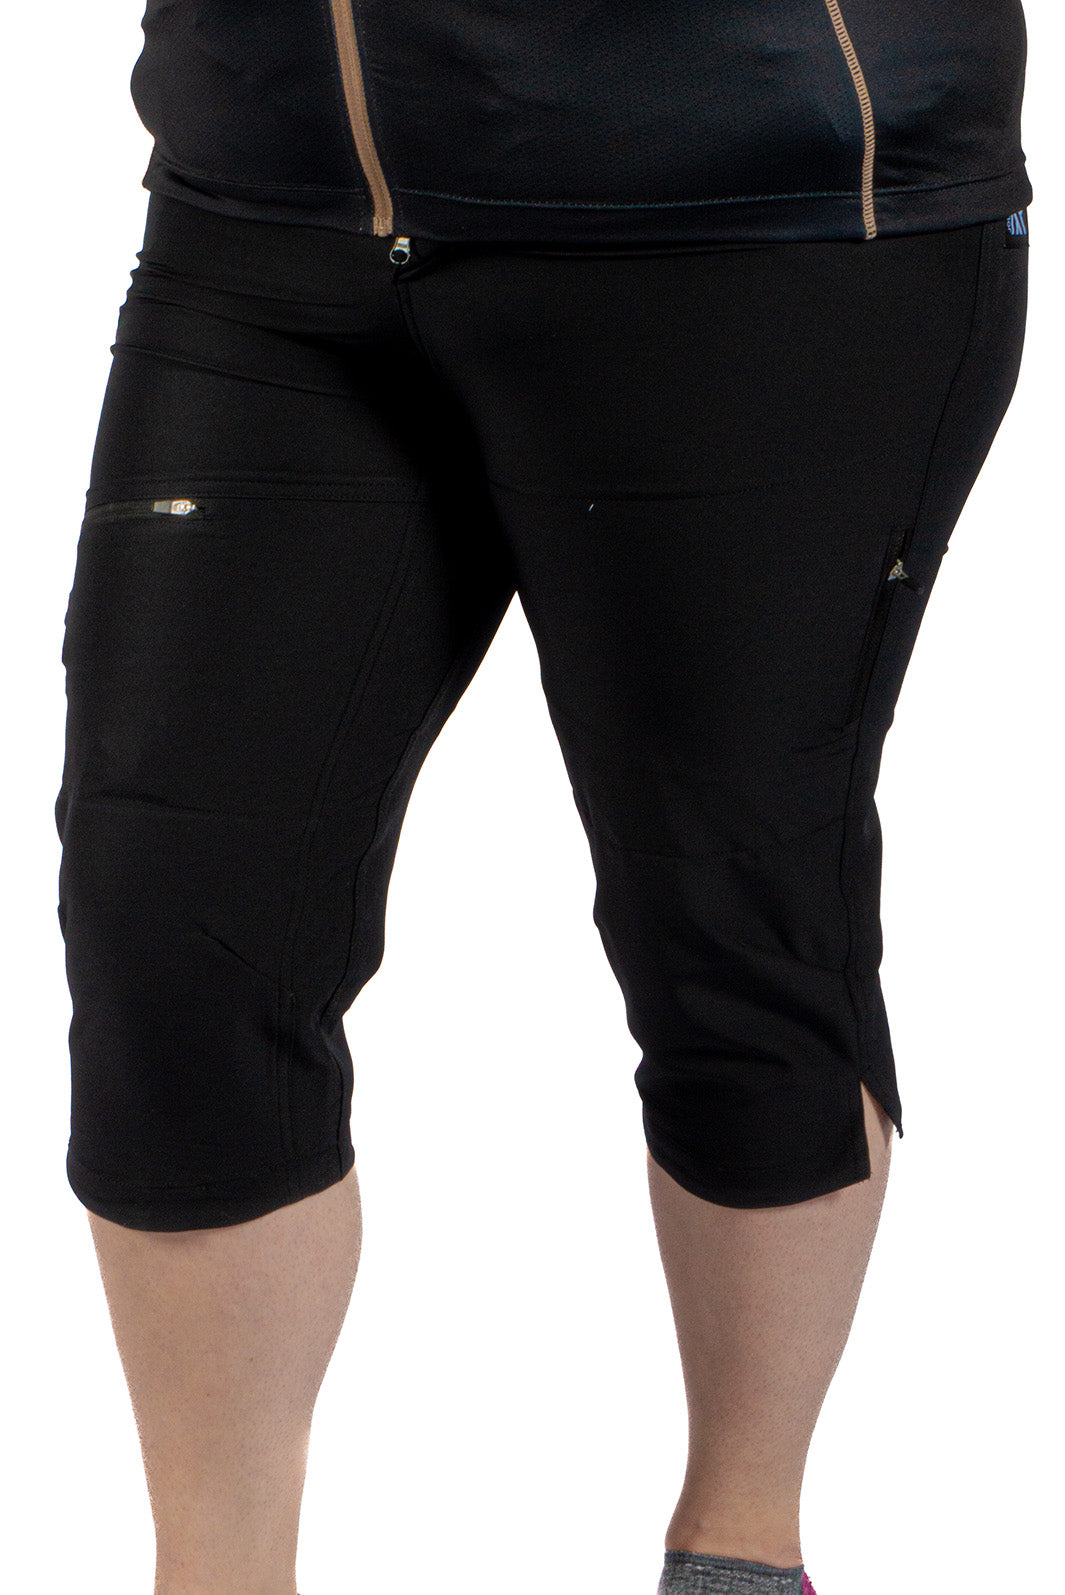 Jolie Ride Plus Size Adjustable Waist Capris and Boxer Shorts with